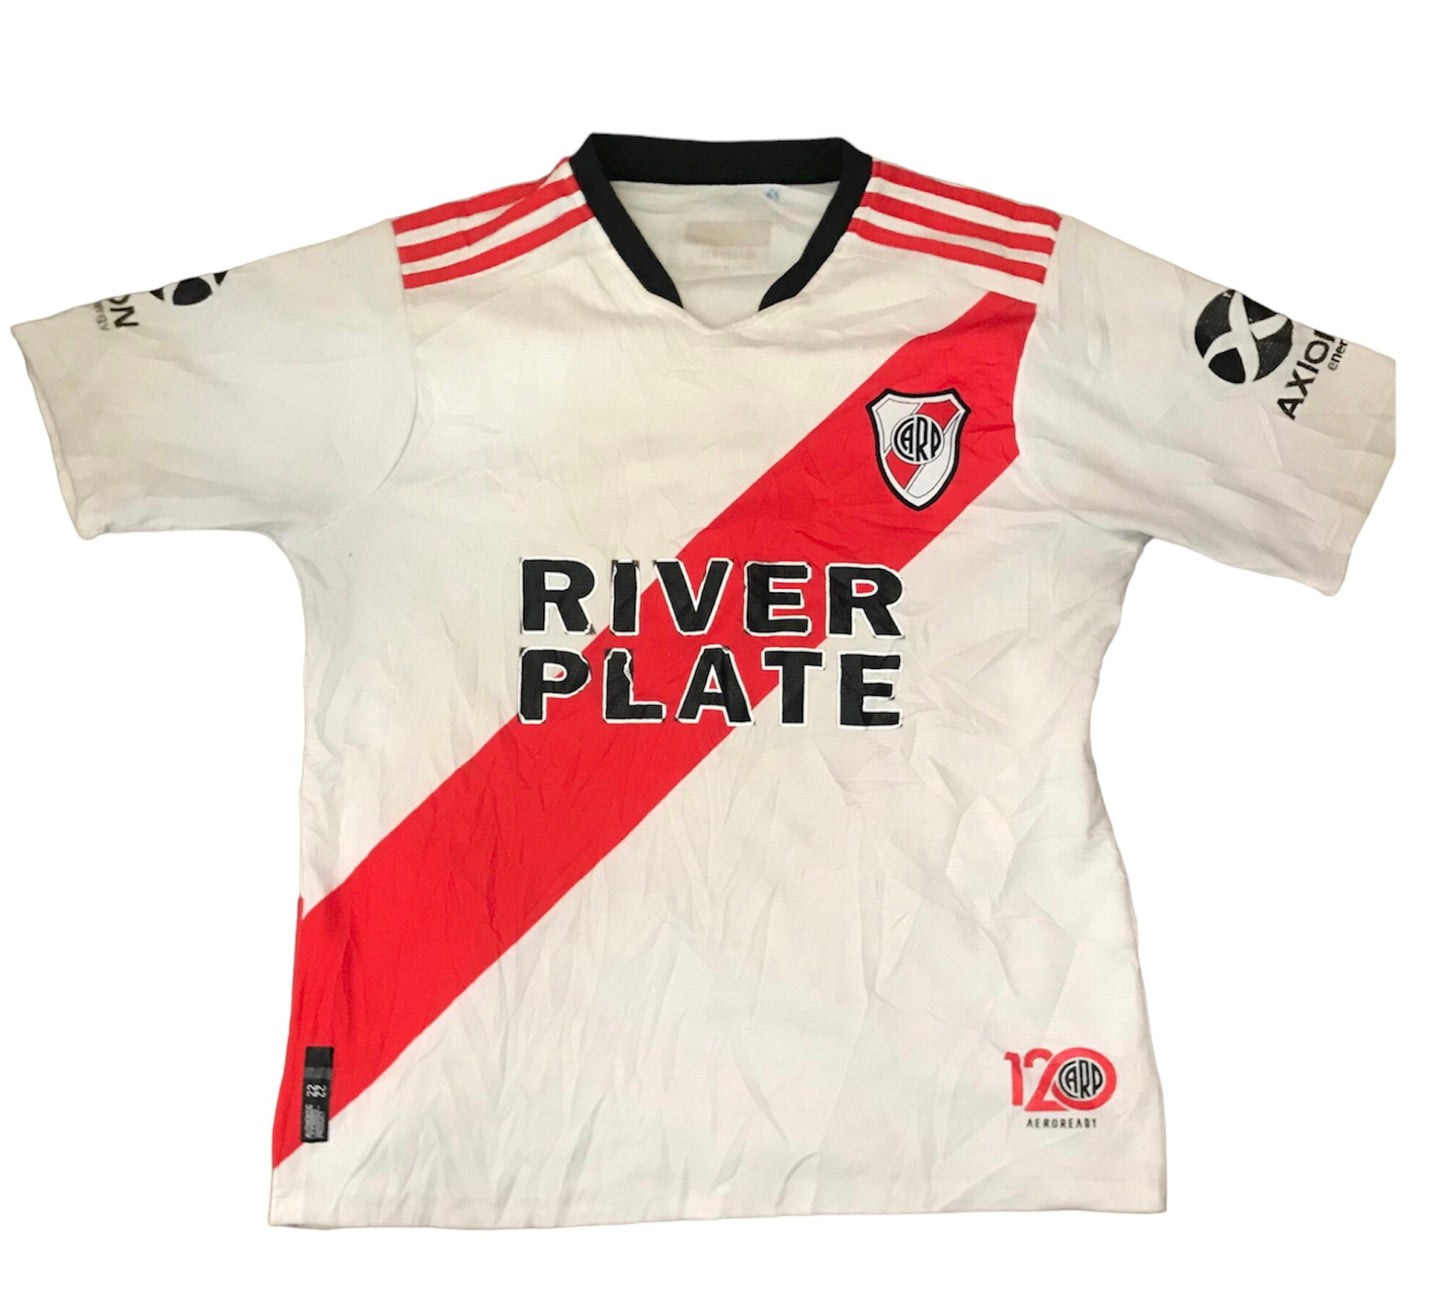 River Plate FC vintage soccer jersey